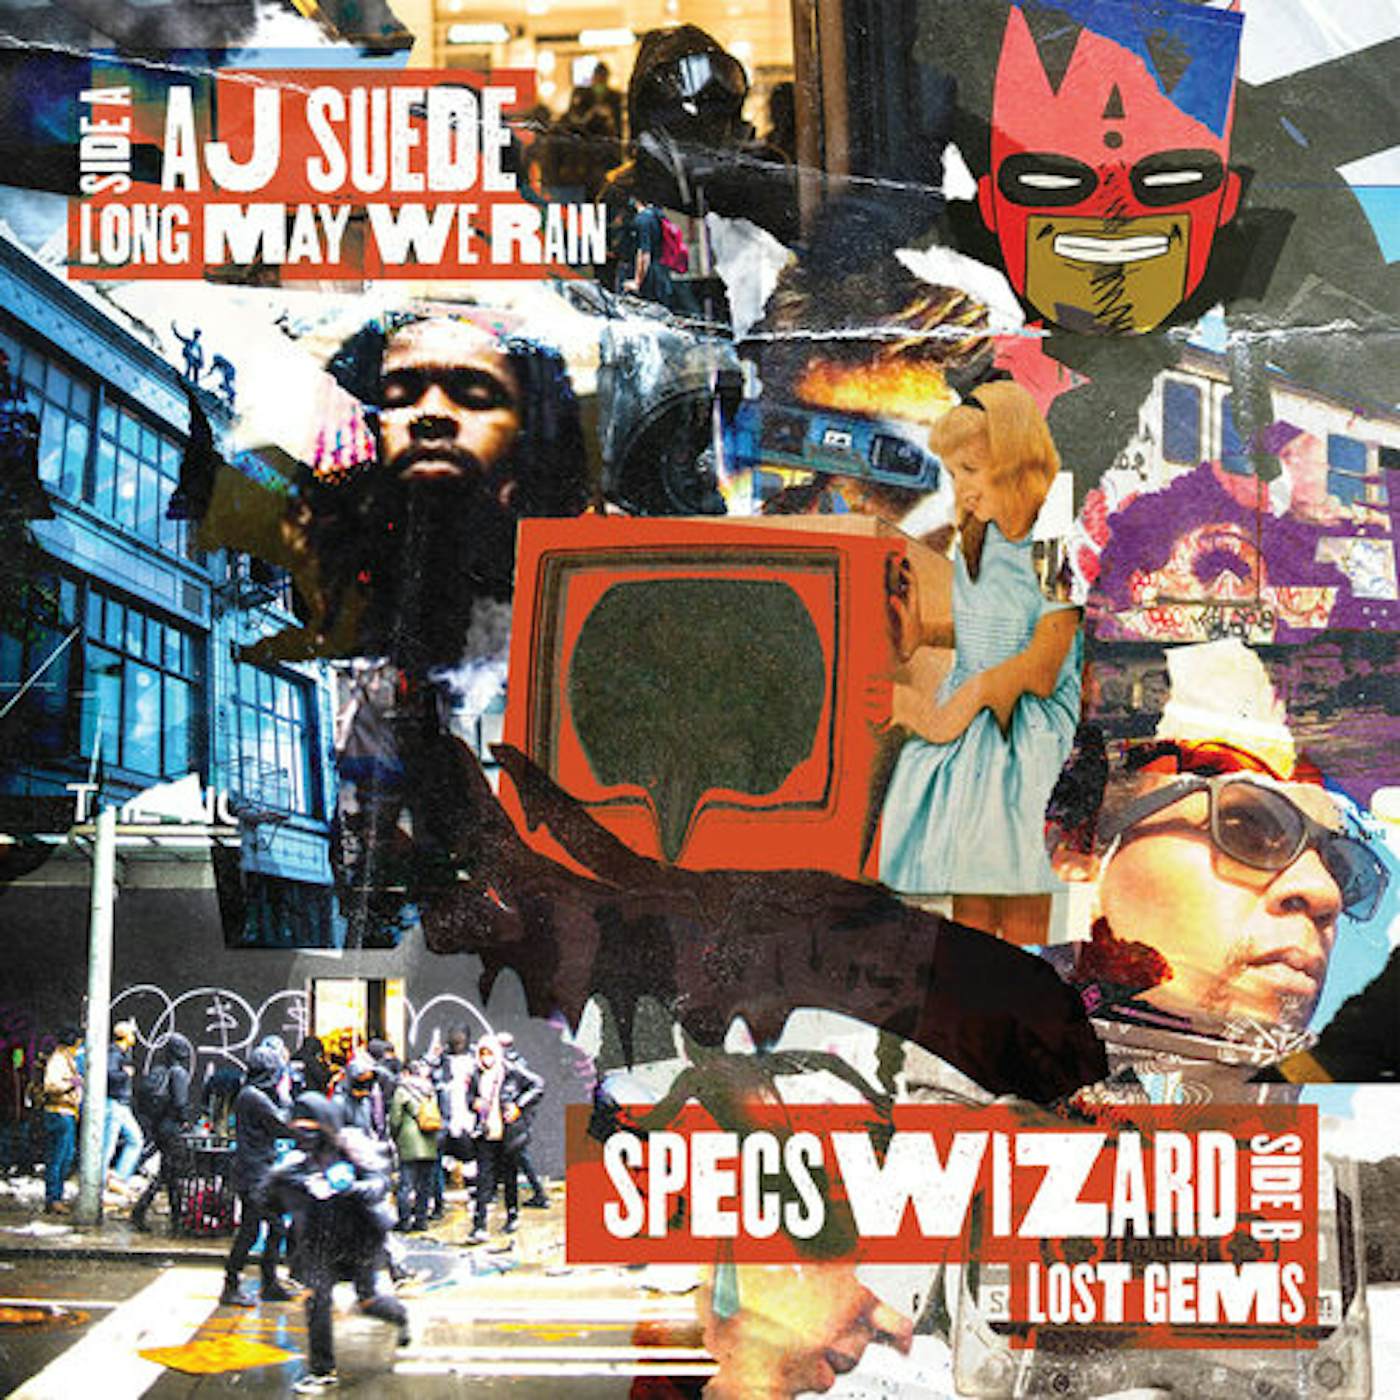 Aj Suede / Specswizard LONG MAY WE RAIN / LOST GEMS Vinyl Record